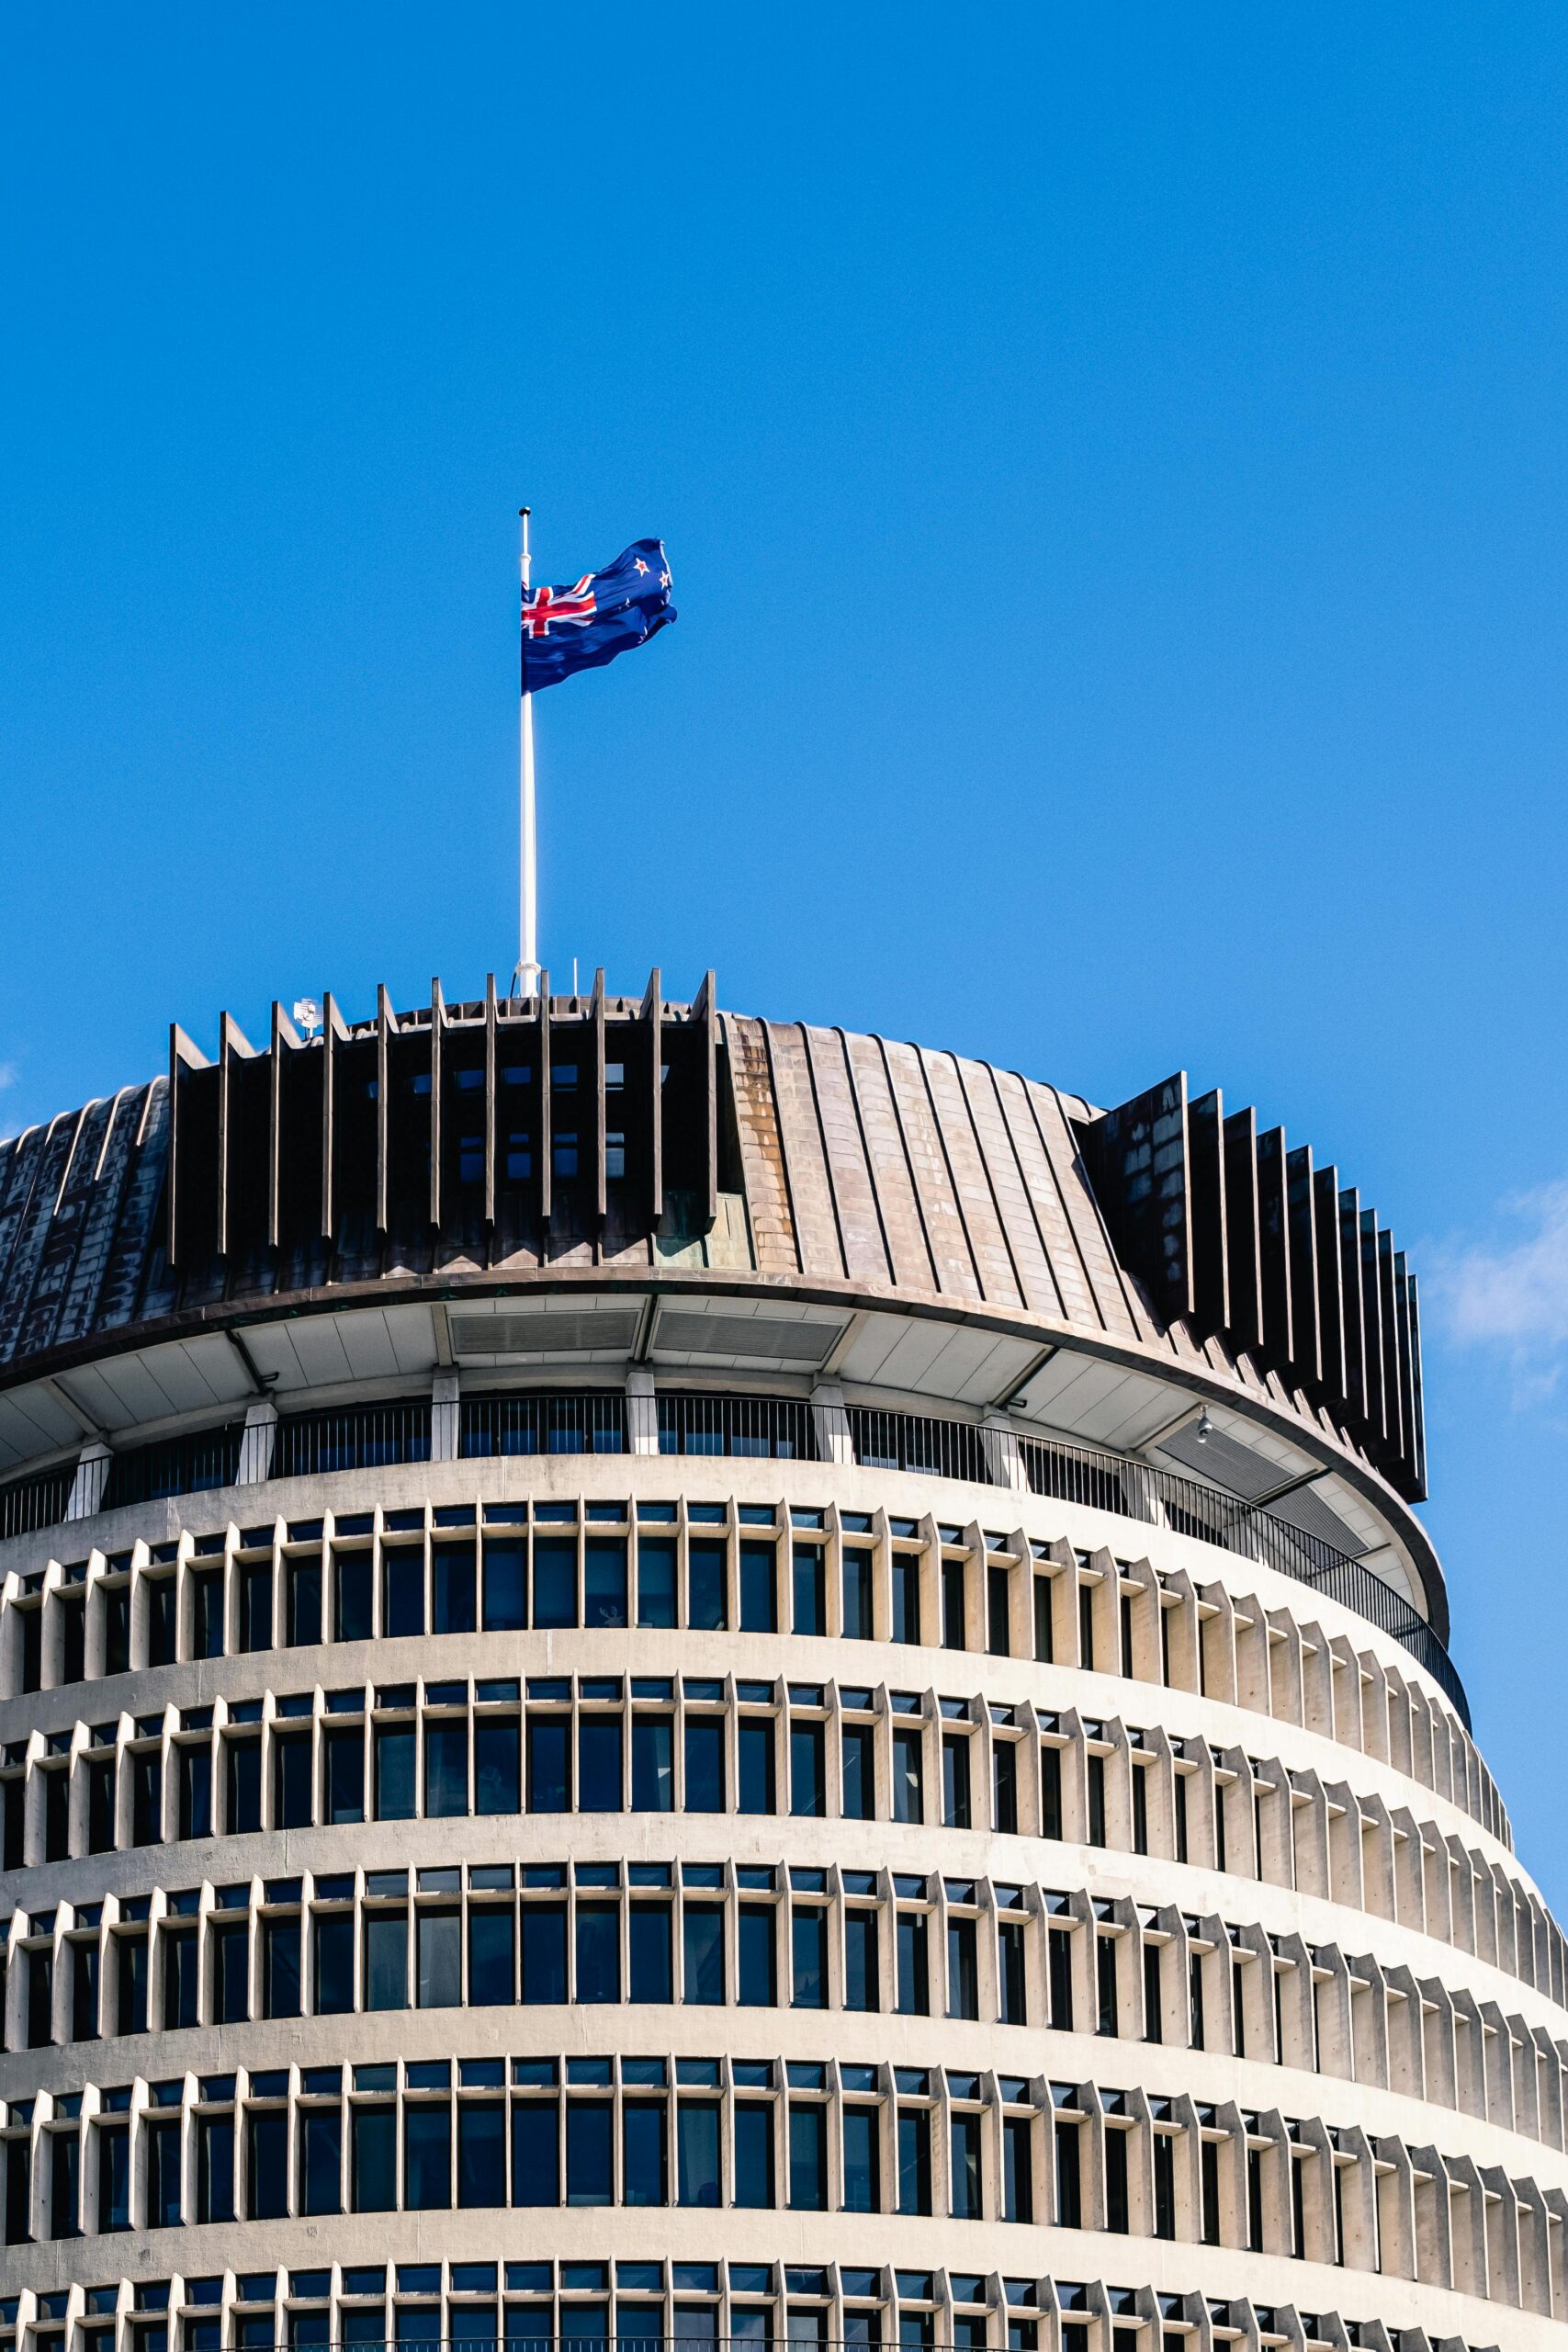 Job cuts in New Zealand public service